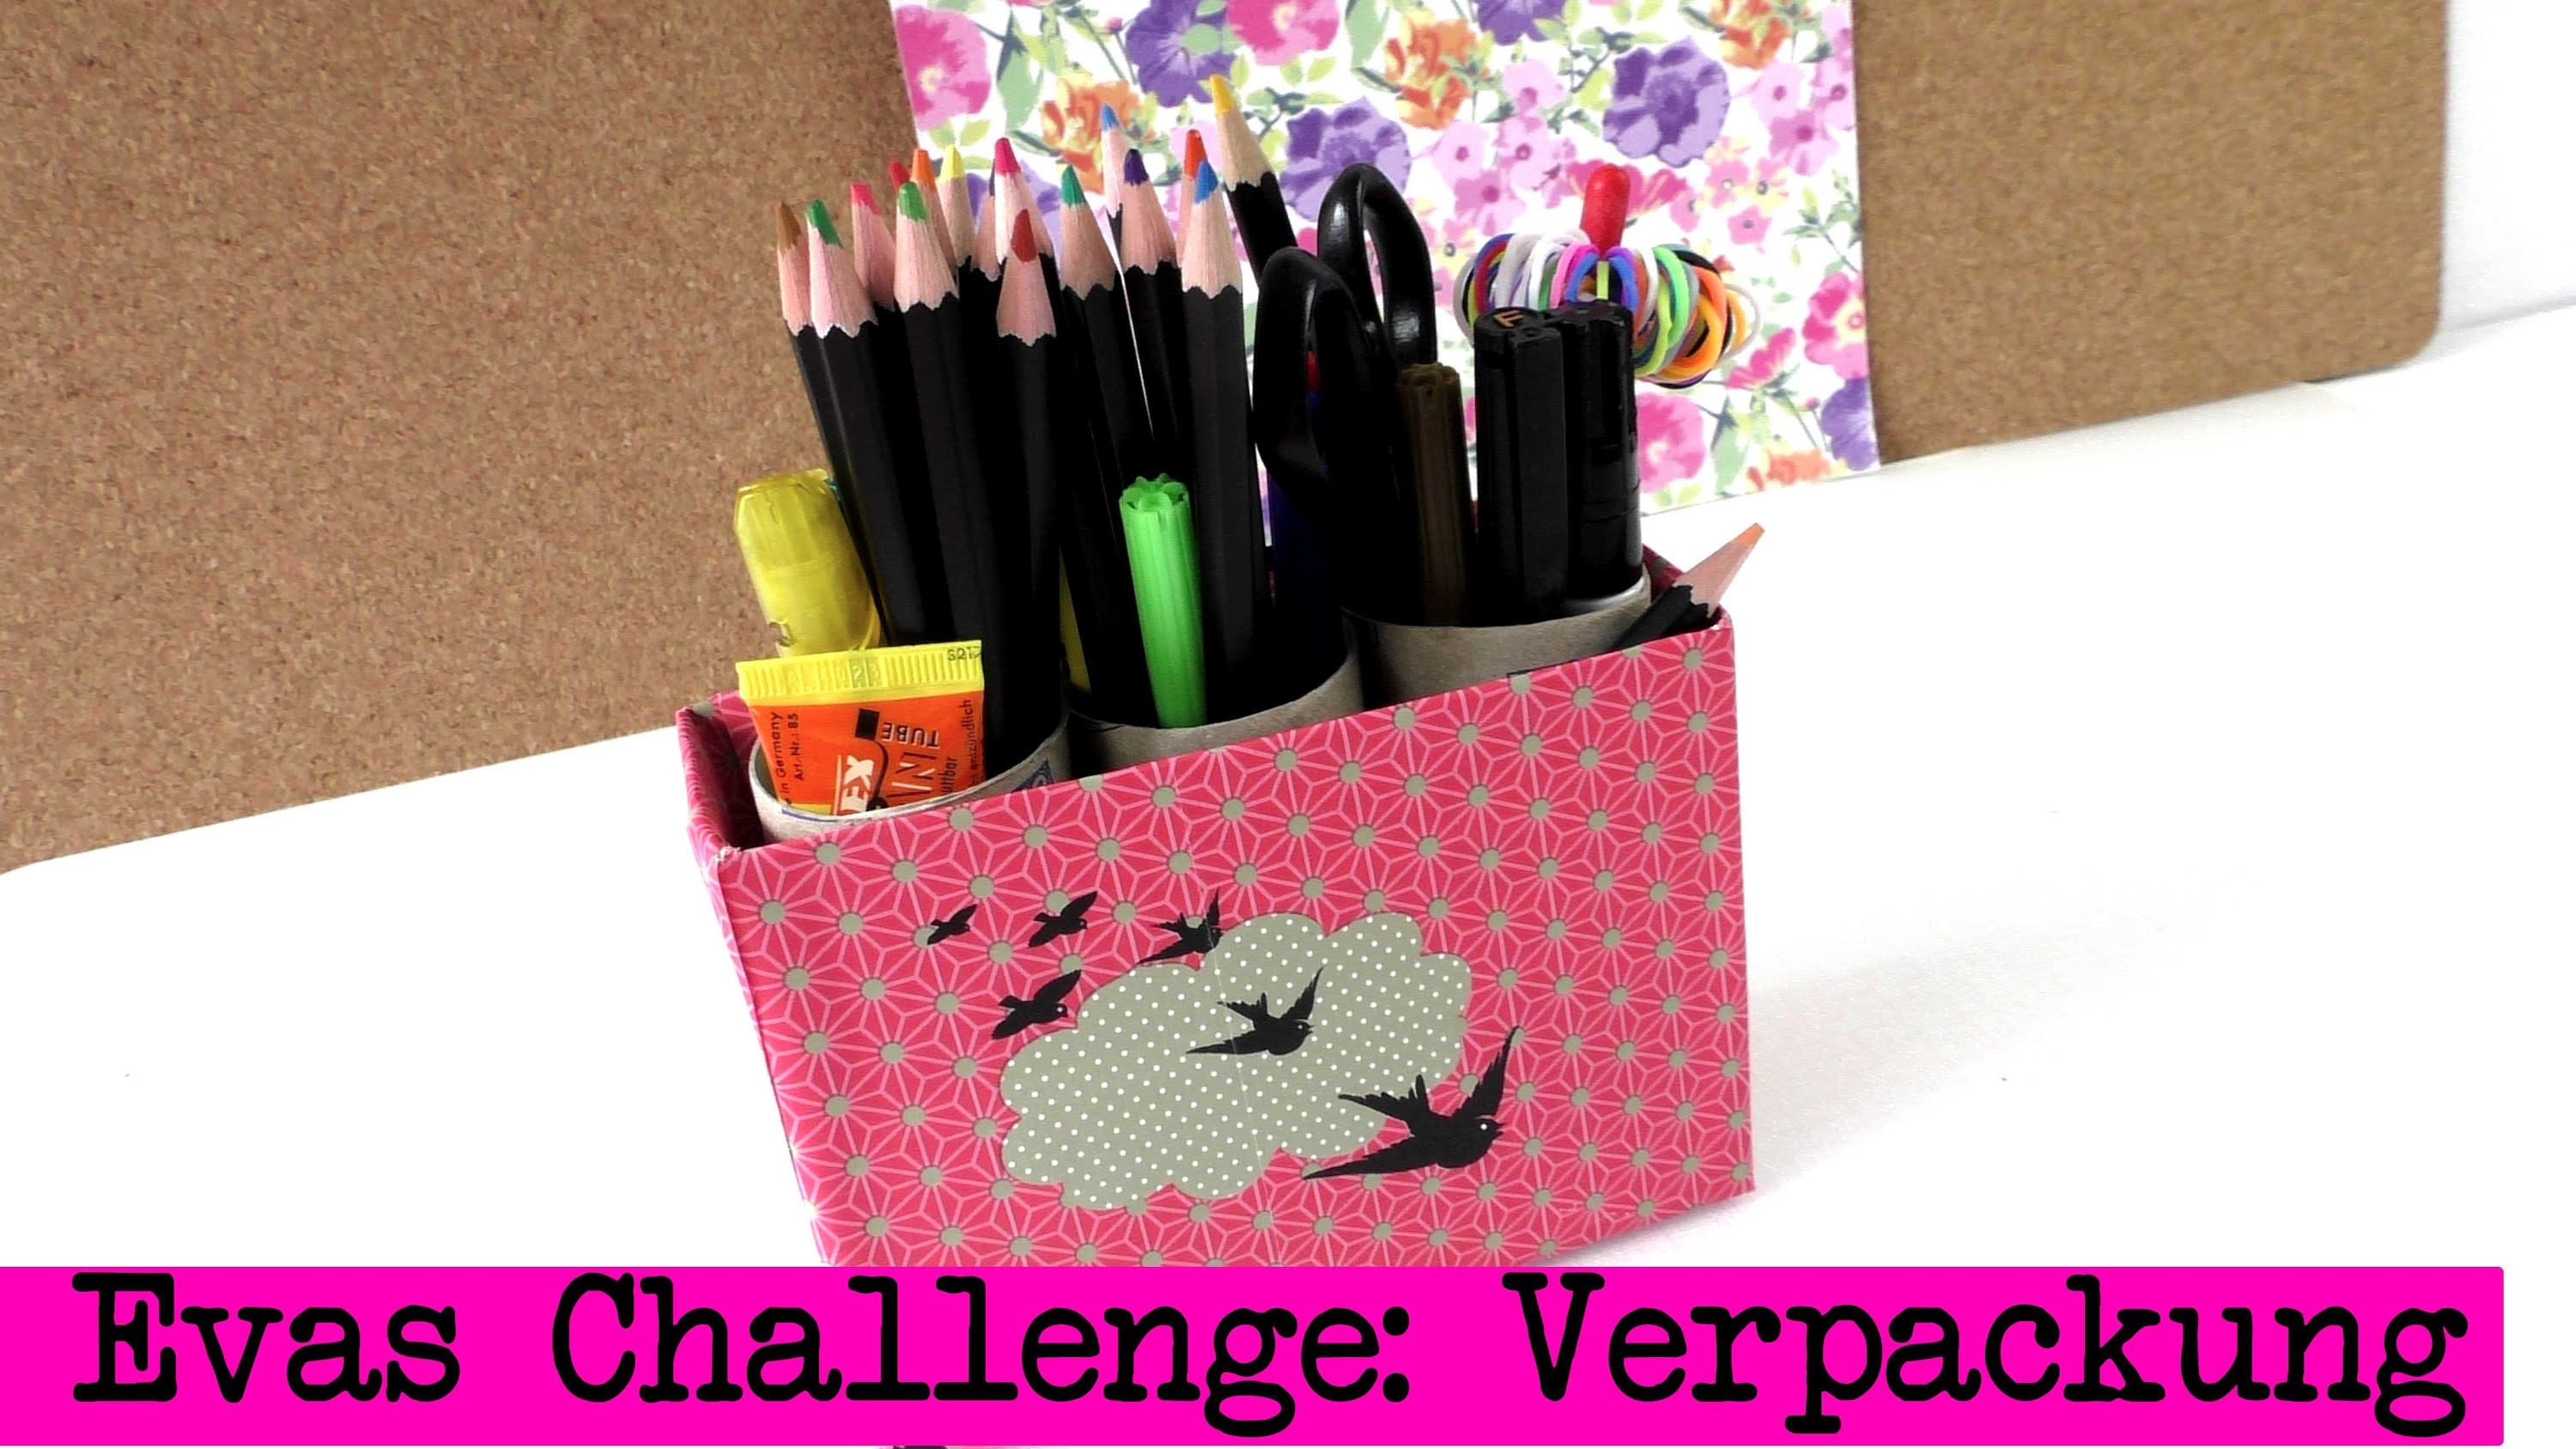 DIY Inspiration Challenge #12 Verpackung | Evas und Kathis Challenge | Do It Yourself Tutorial